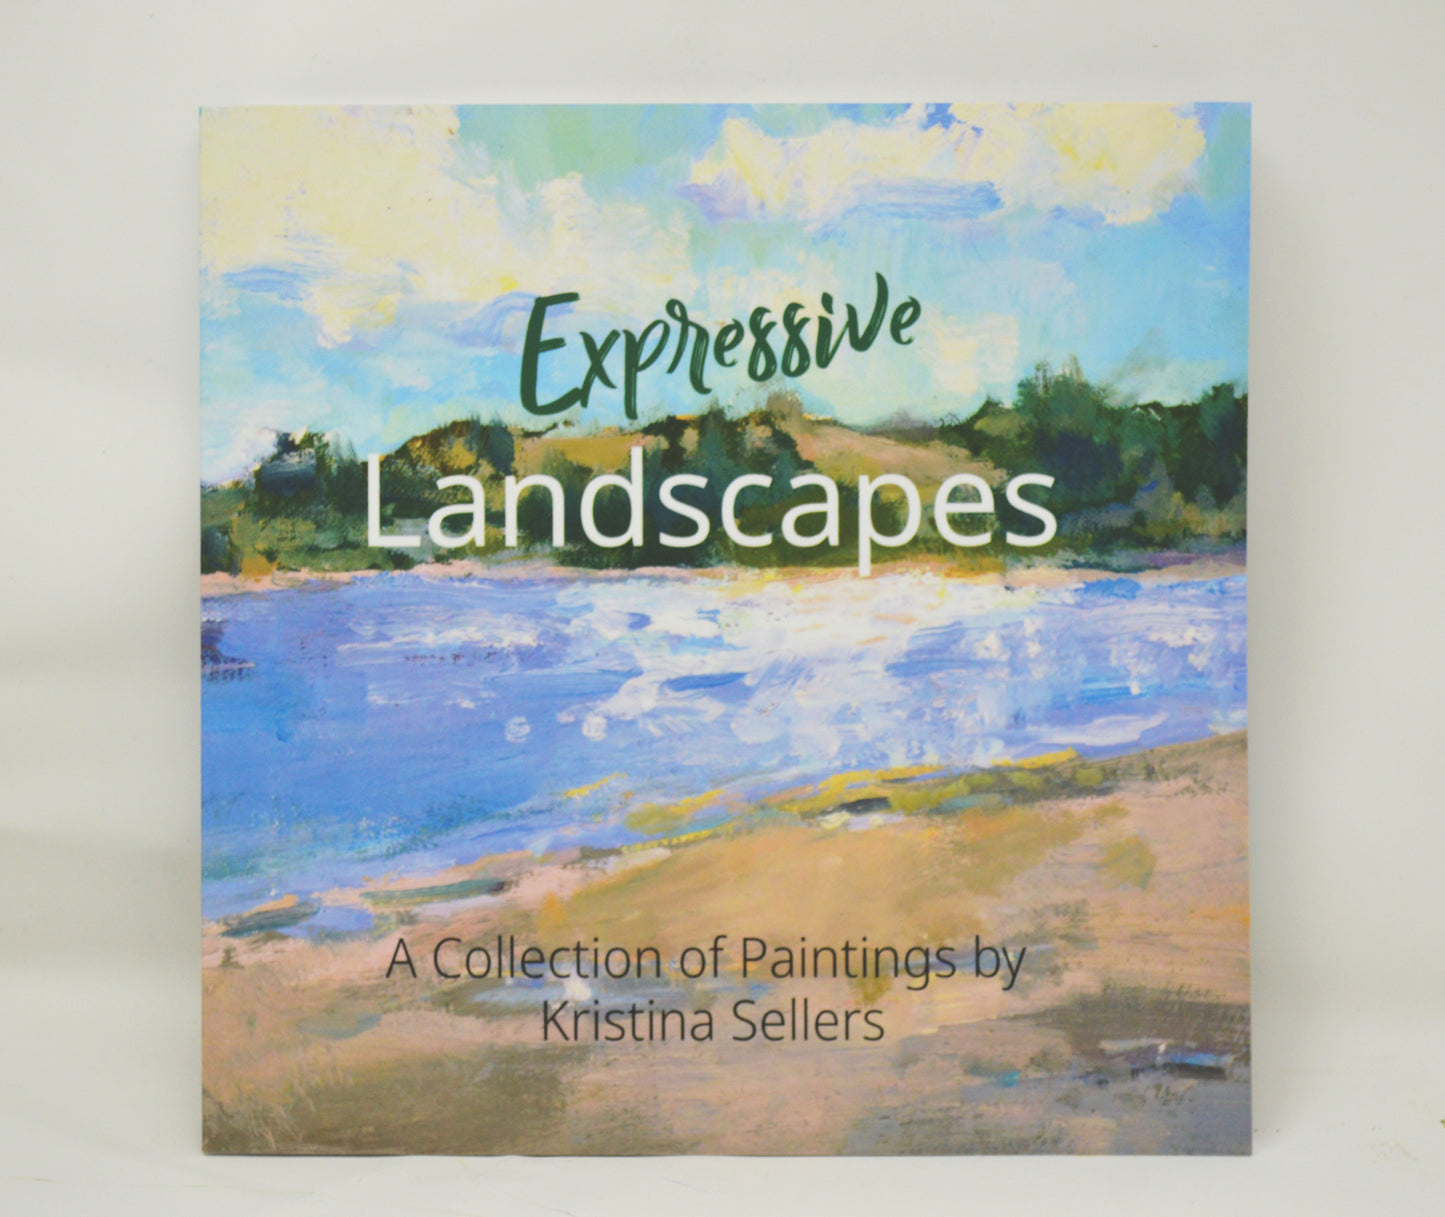 "Expressive Landscapes", by Kristina Sellers